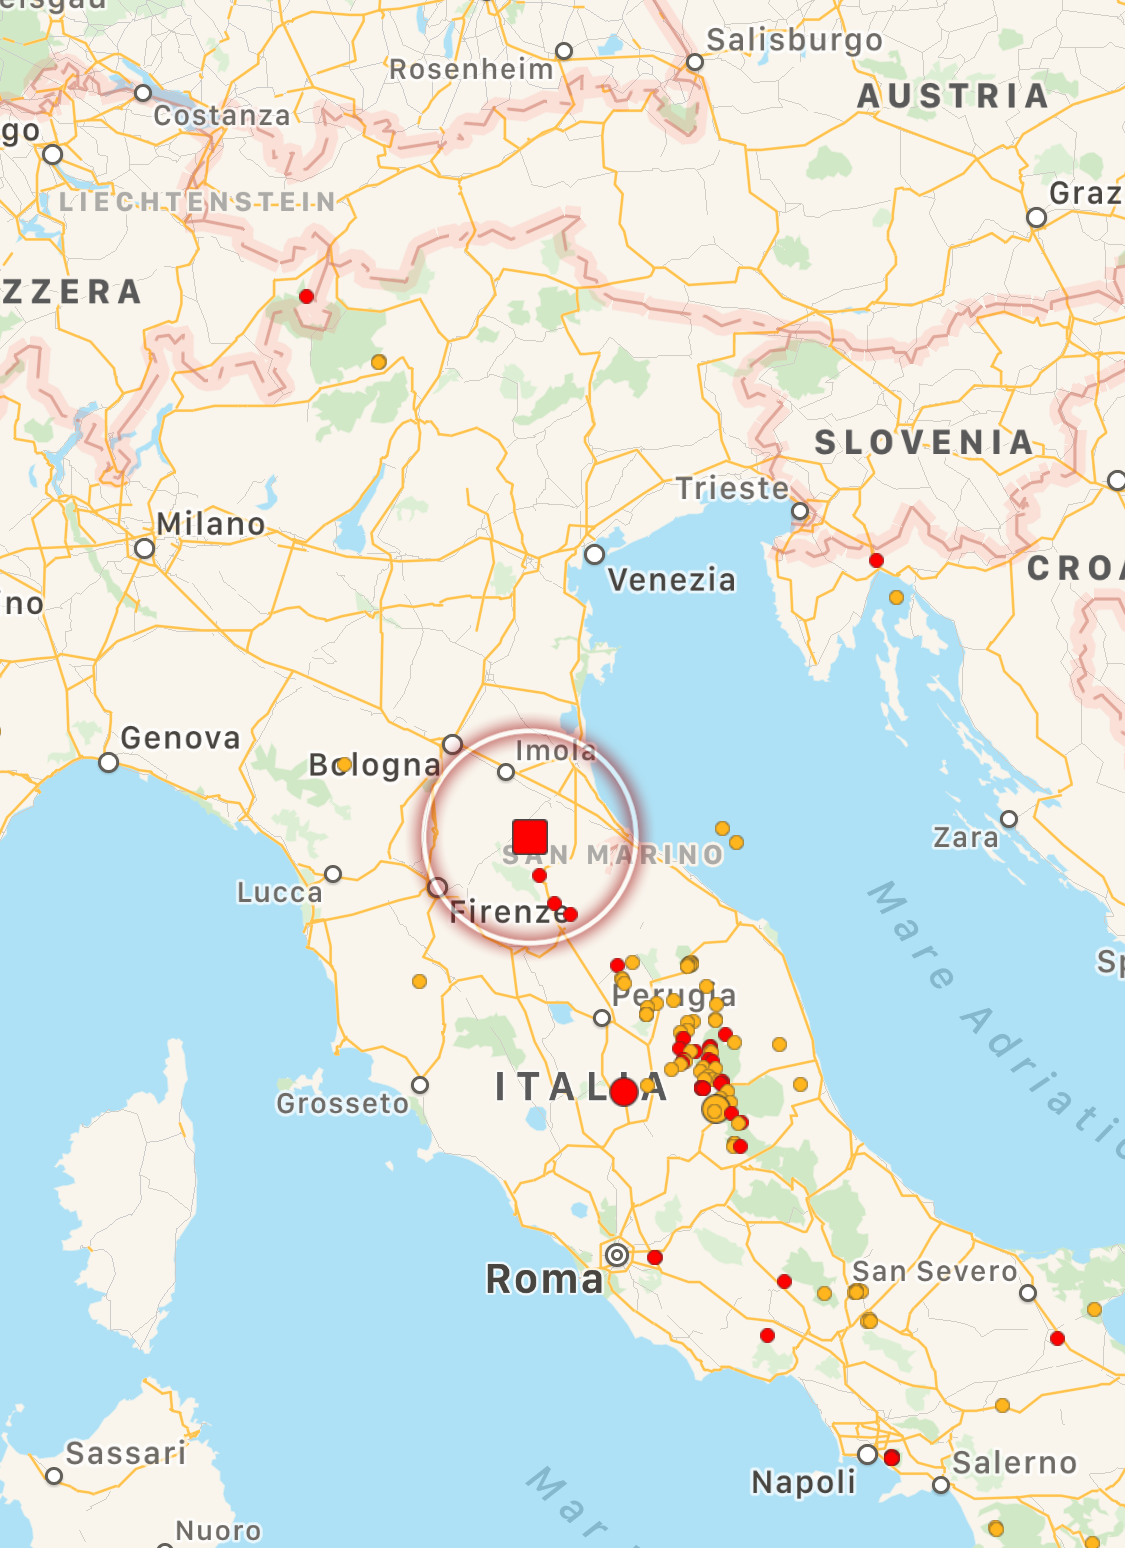 terremoto forlì